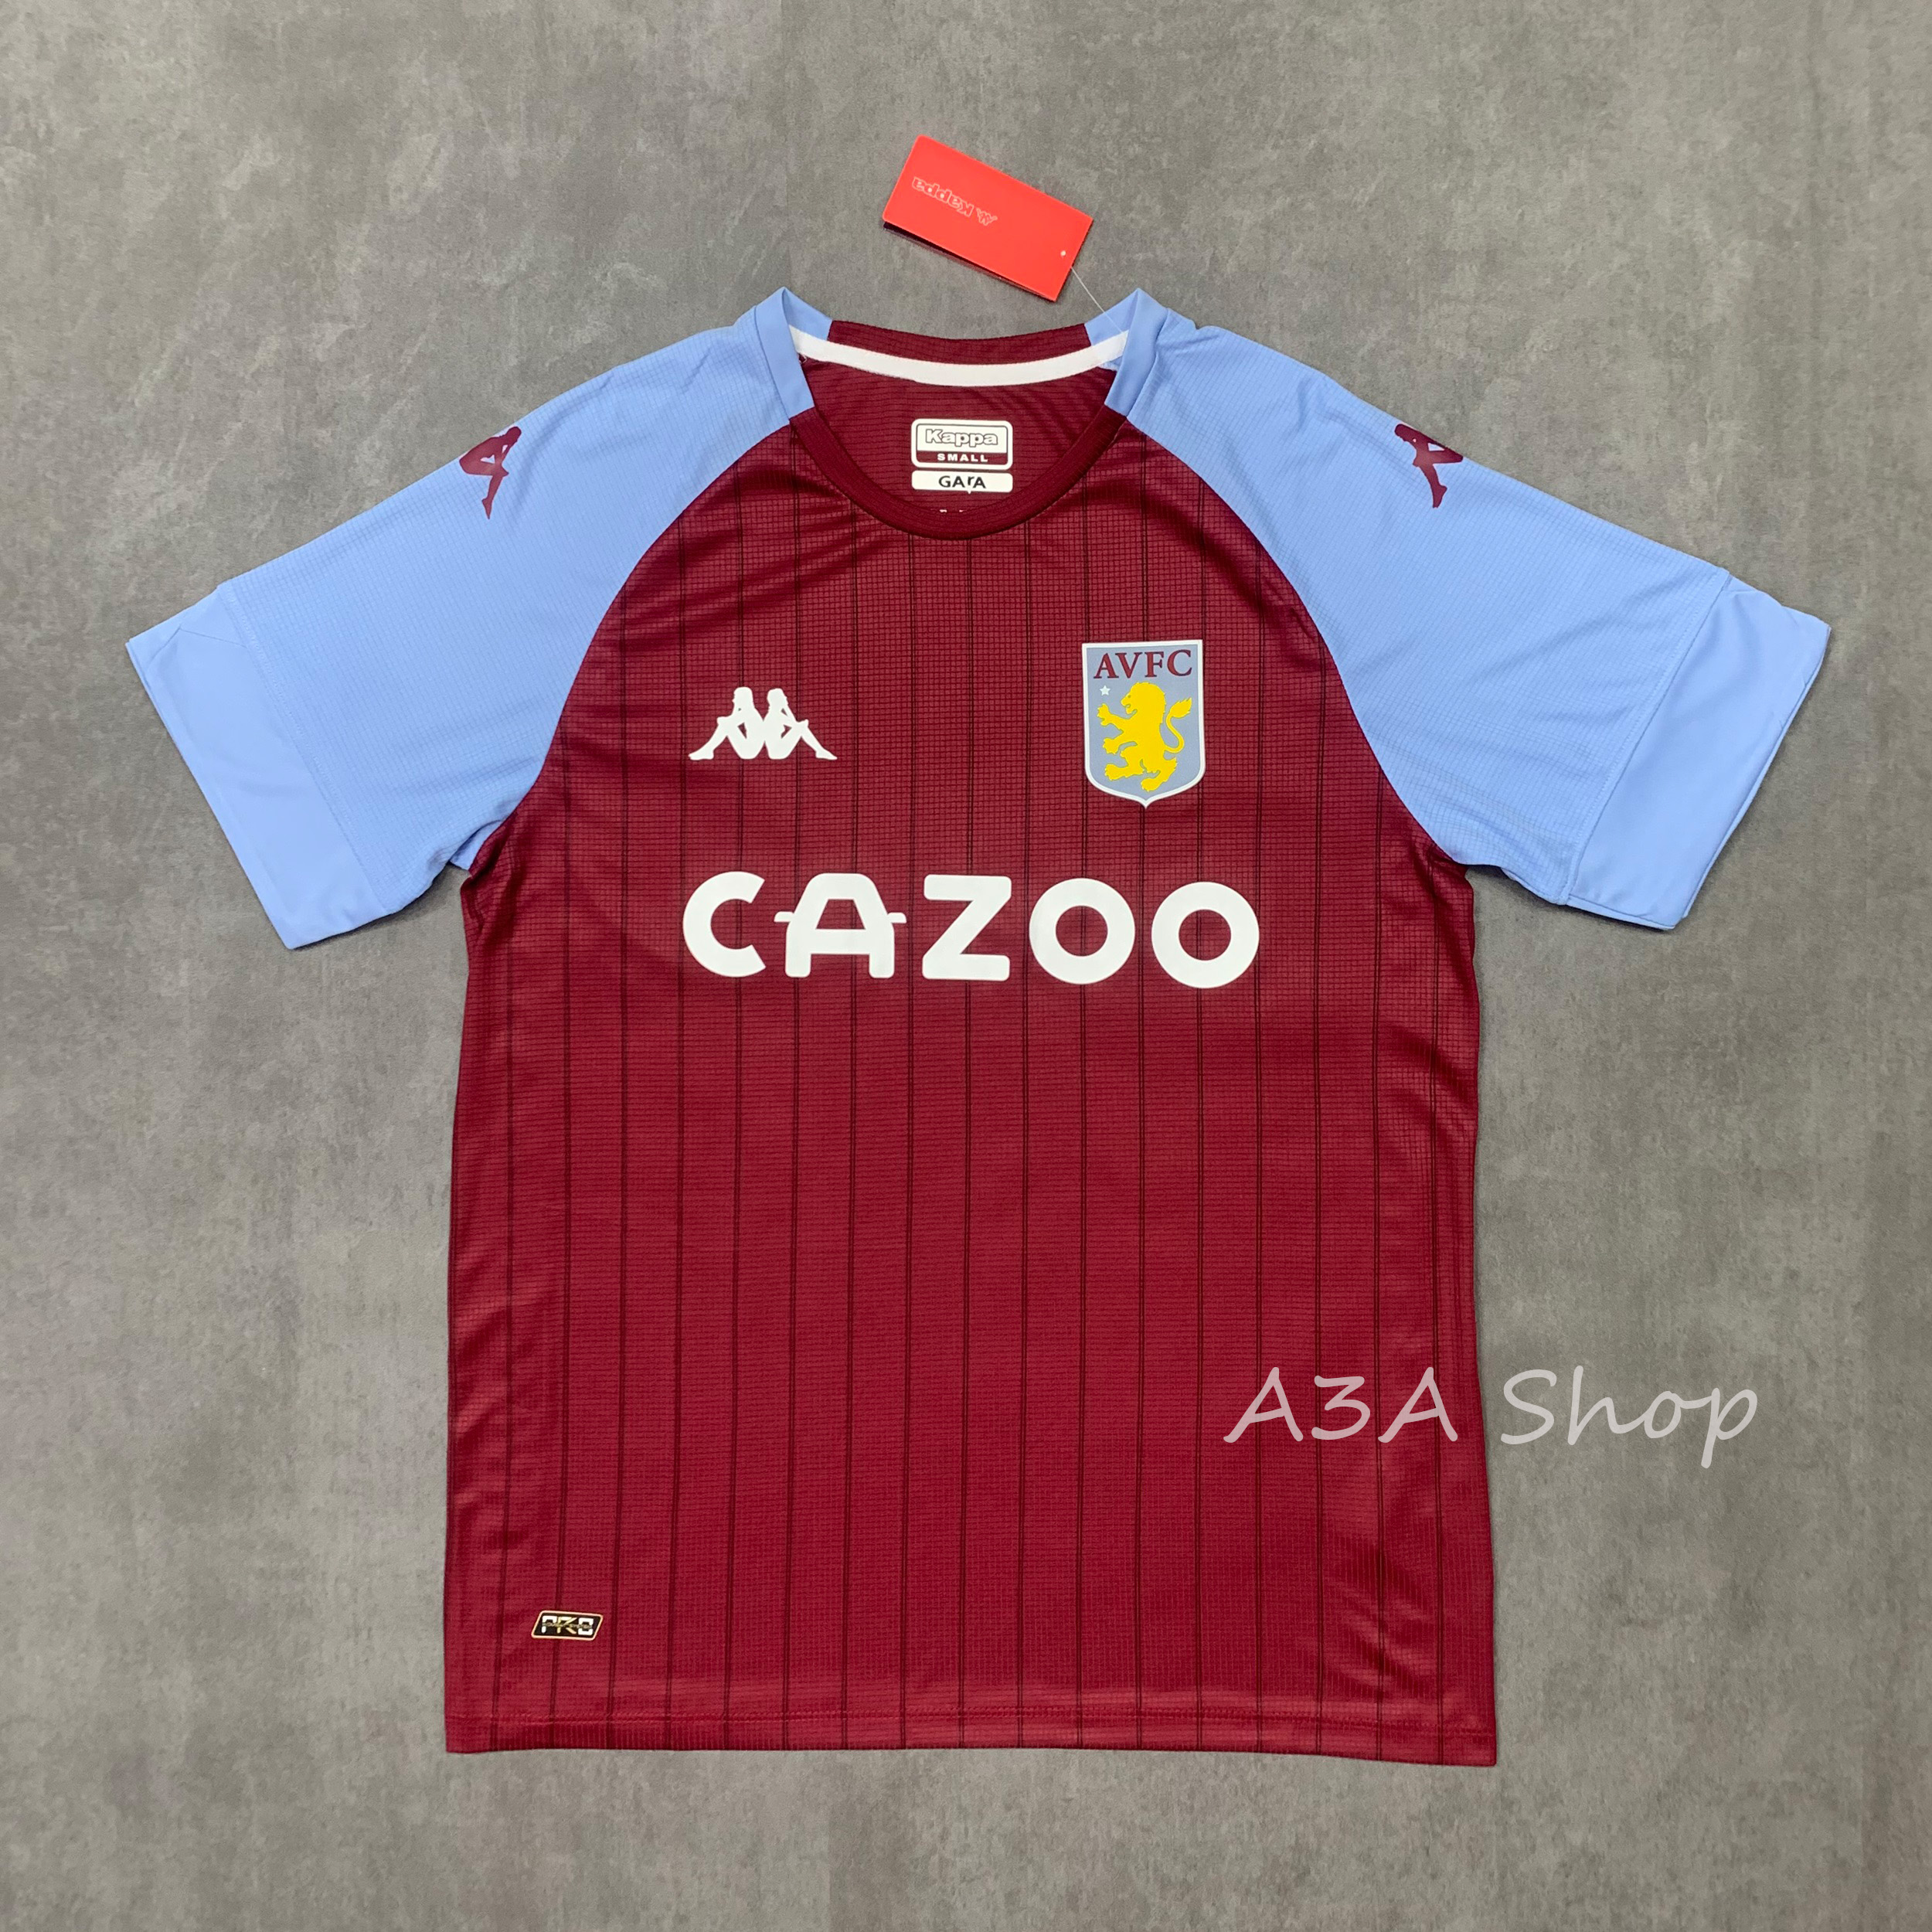 Aston Villa 20/21 FOOTBALL SHIRT SOCCER Jersey  เสื้อบอล เสื้อฟุตบอลชาย เสื้อบอลชาย เสื้อฟุตบอล เสื้อกีฬาชาย2021 เสื้อทีมเอสตันวิลลา ปี21 เกรด 3A+